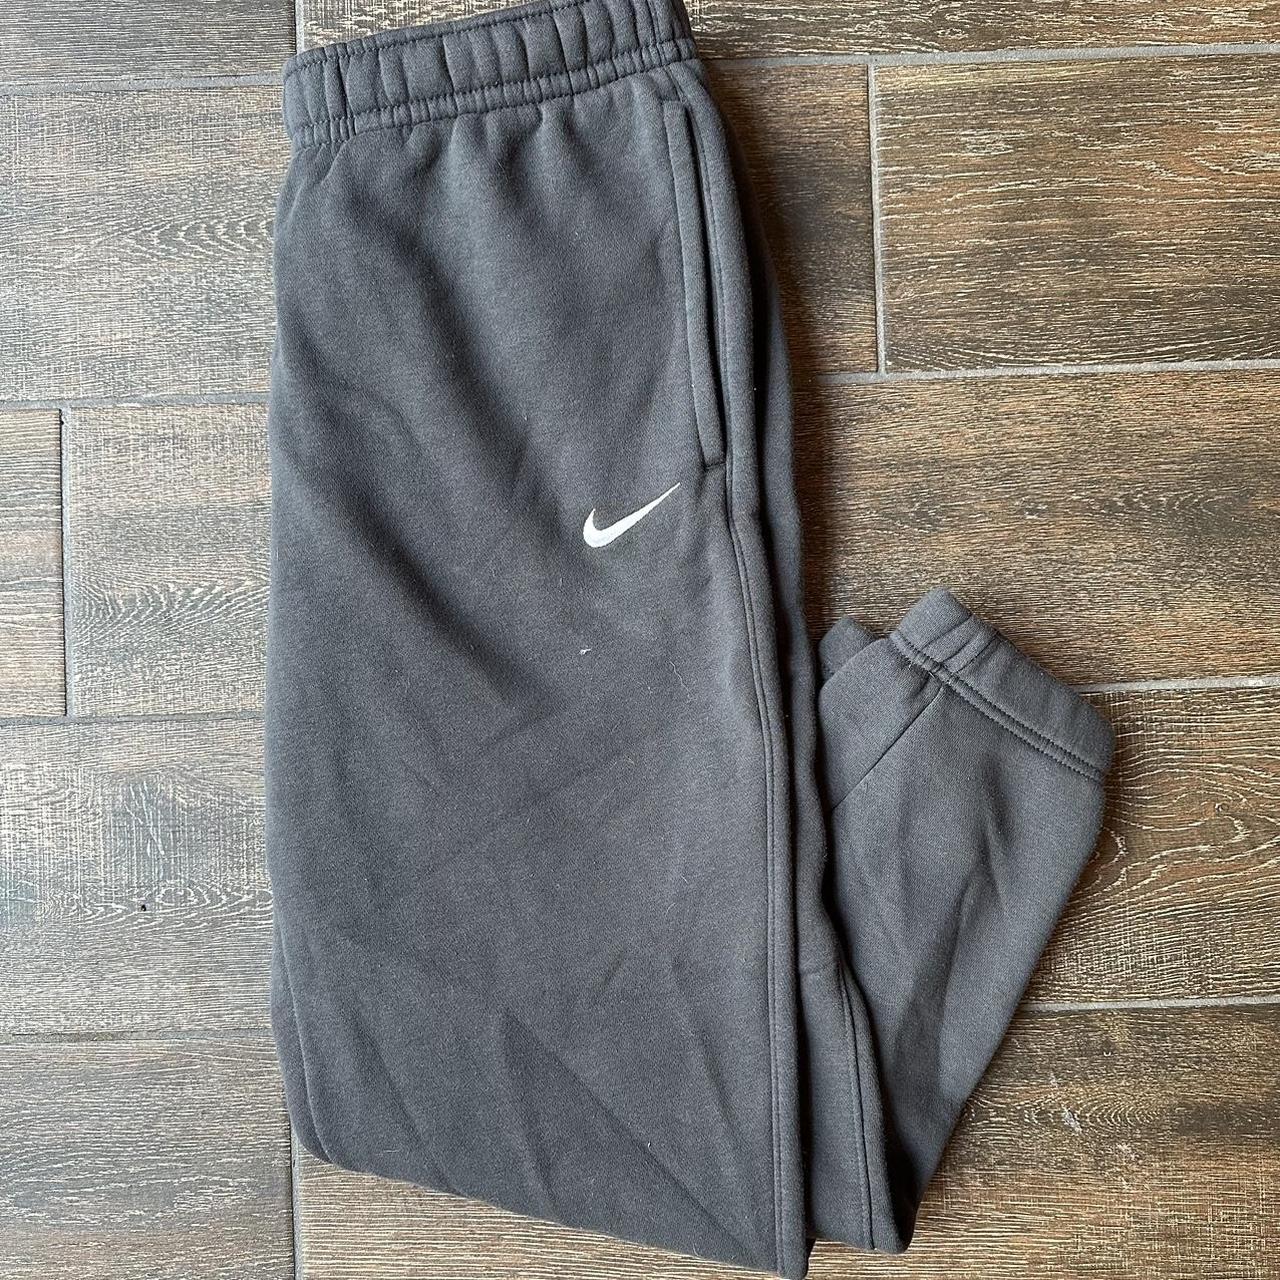 Medium Grey Nike Sweatpants. Worn a few times. No... - Depop